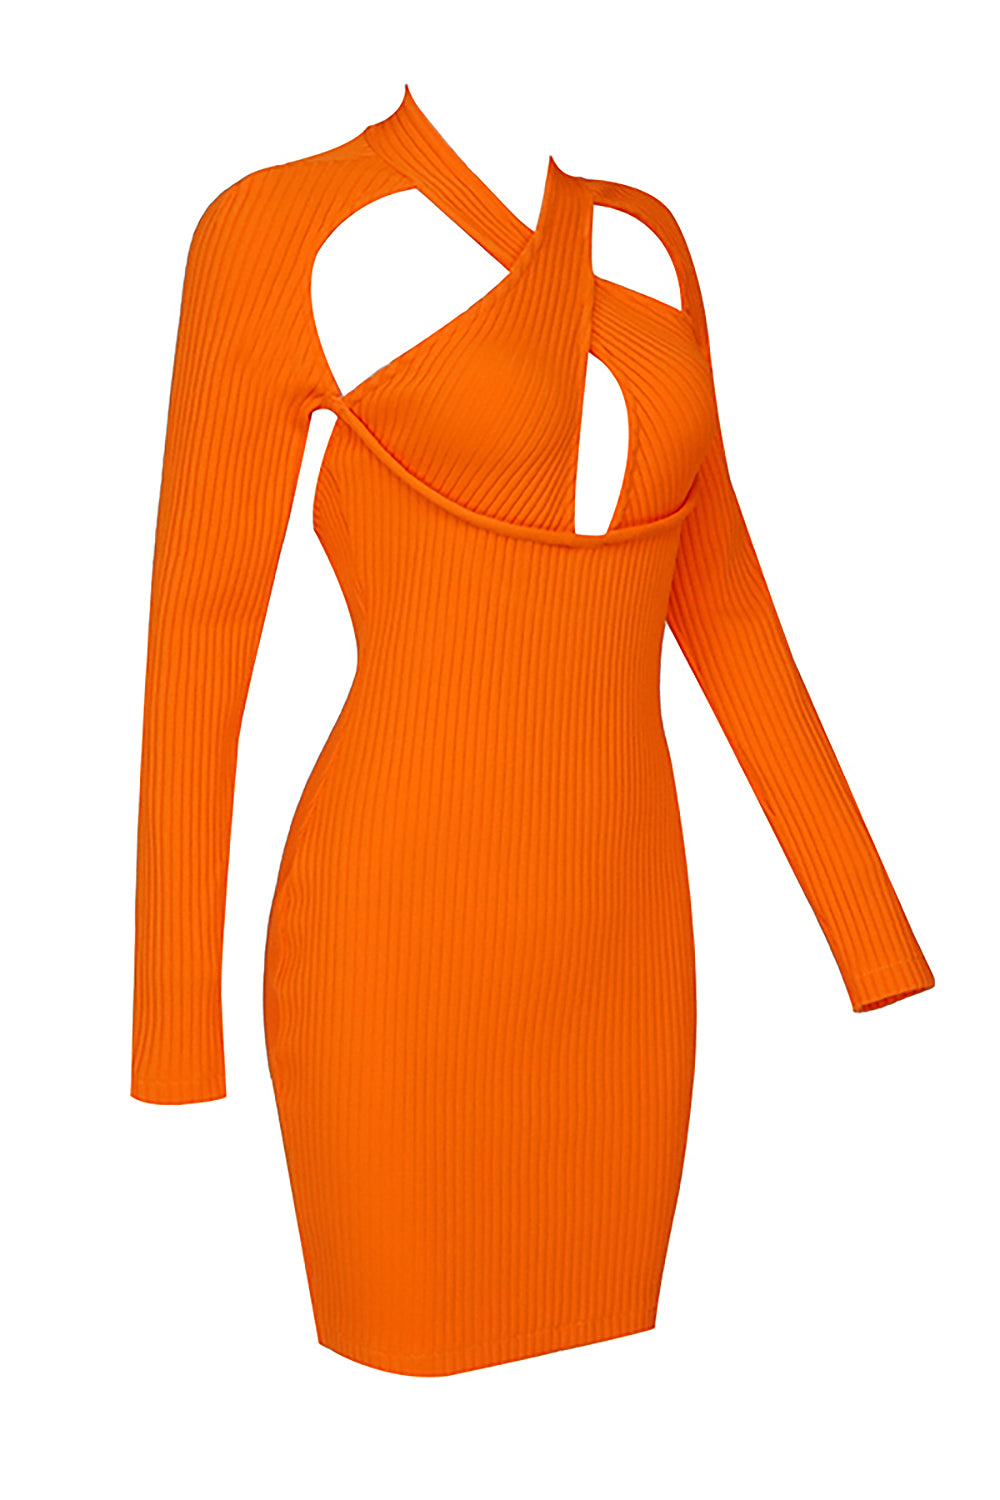 Vestido laranja cruzado de manga comprida com bandagem vazada